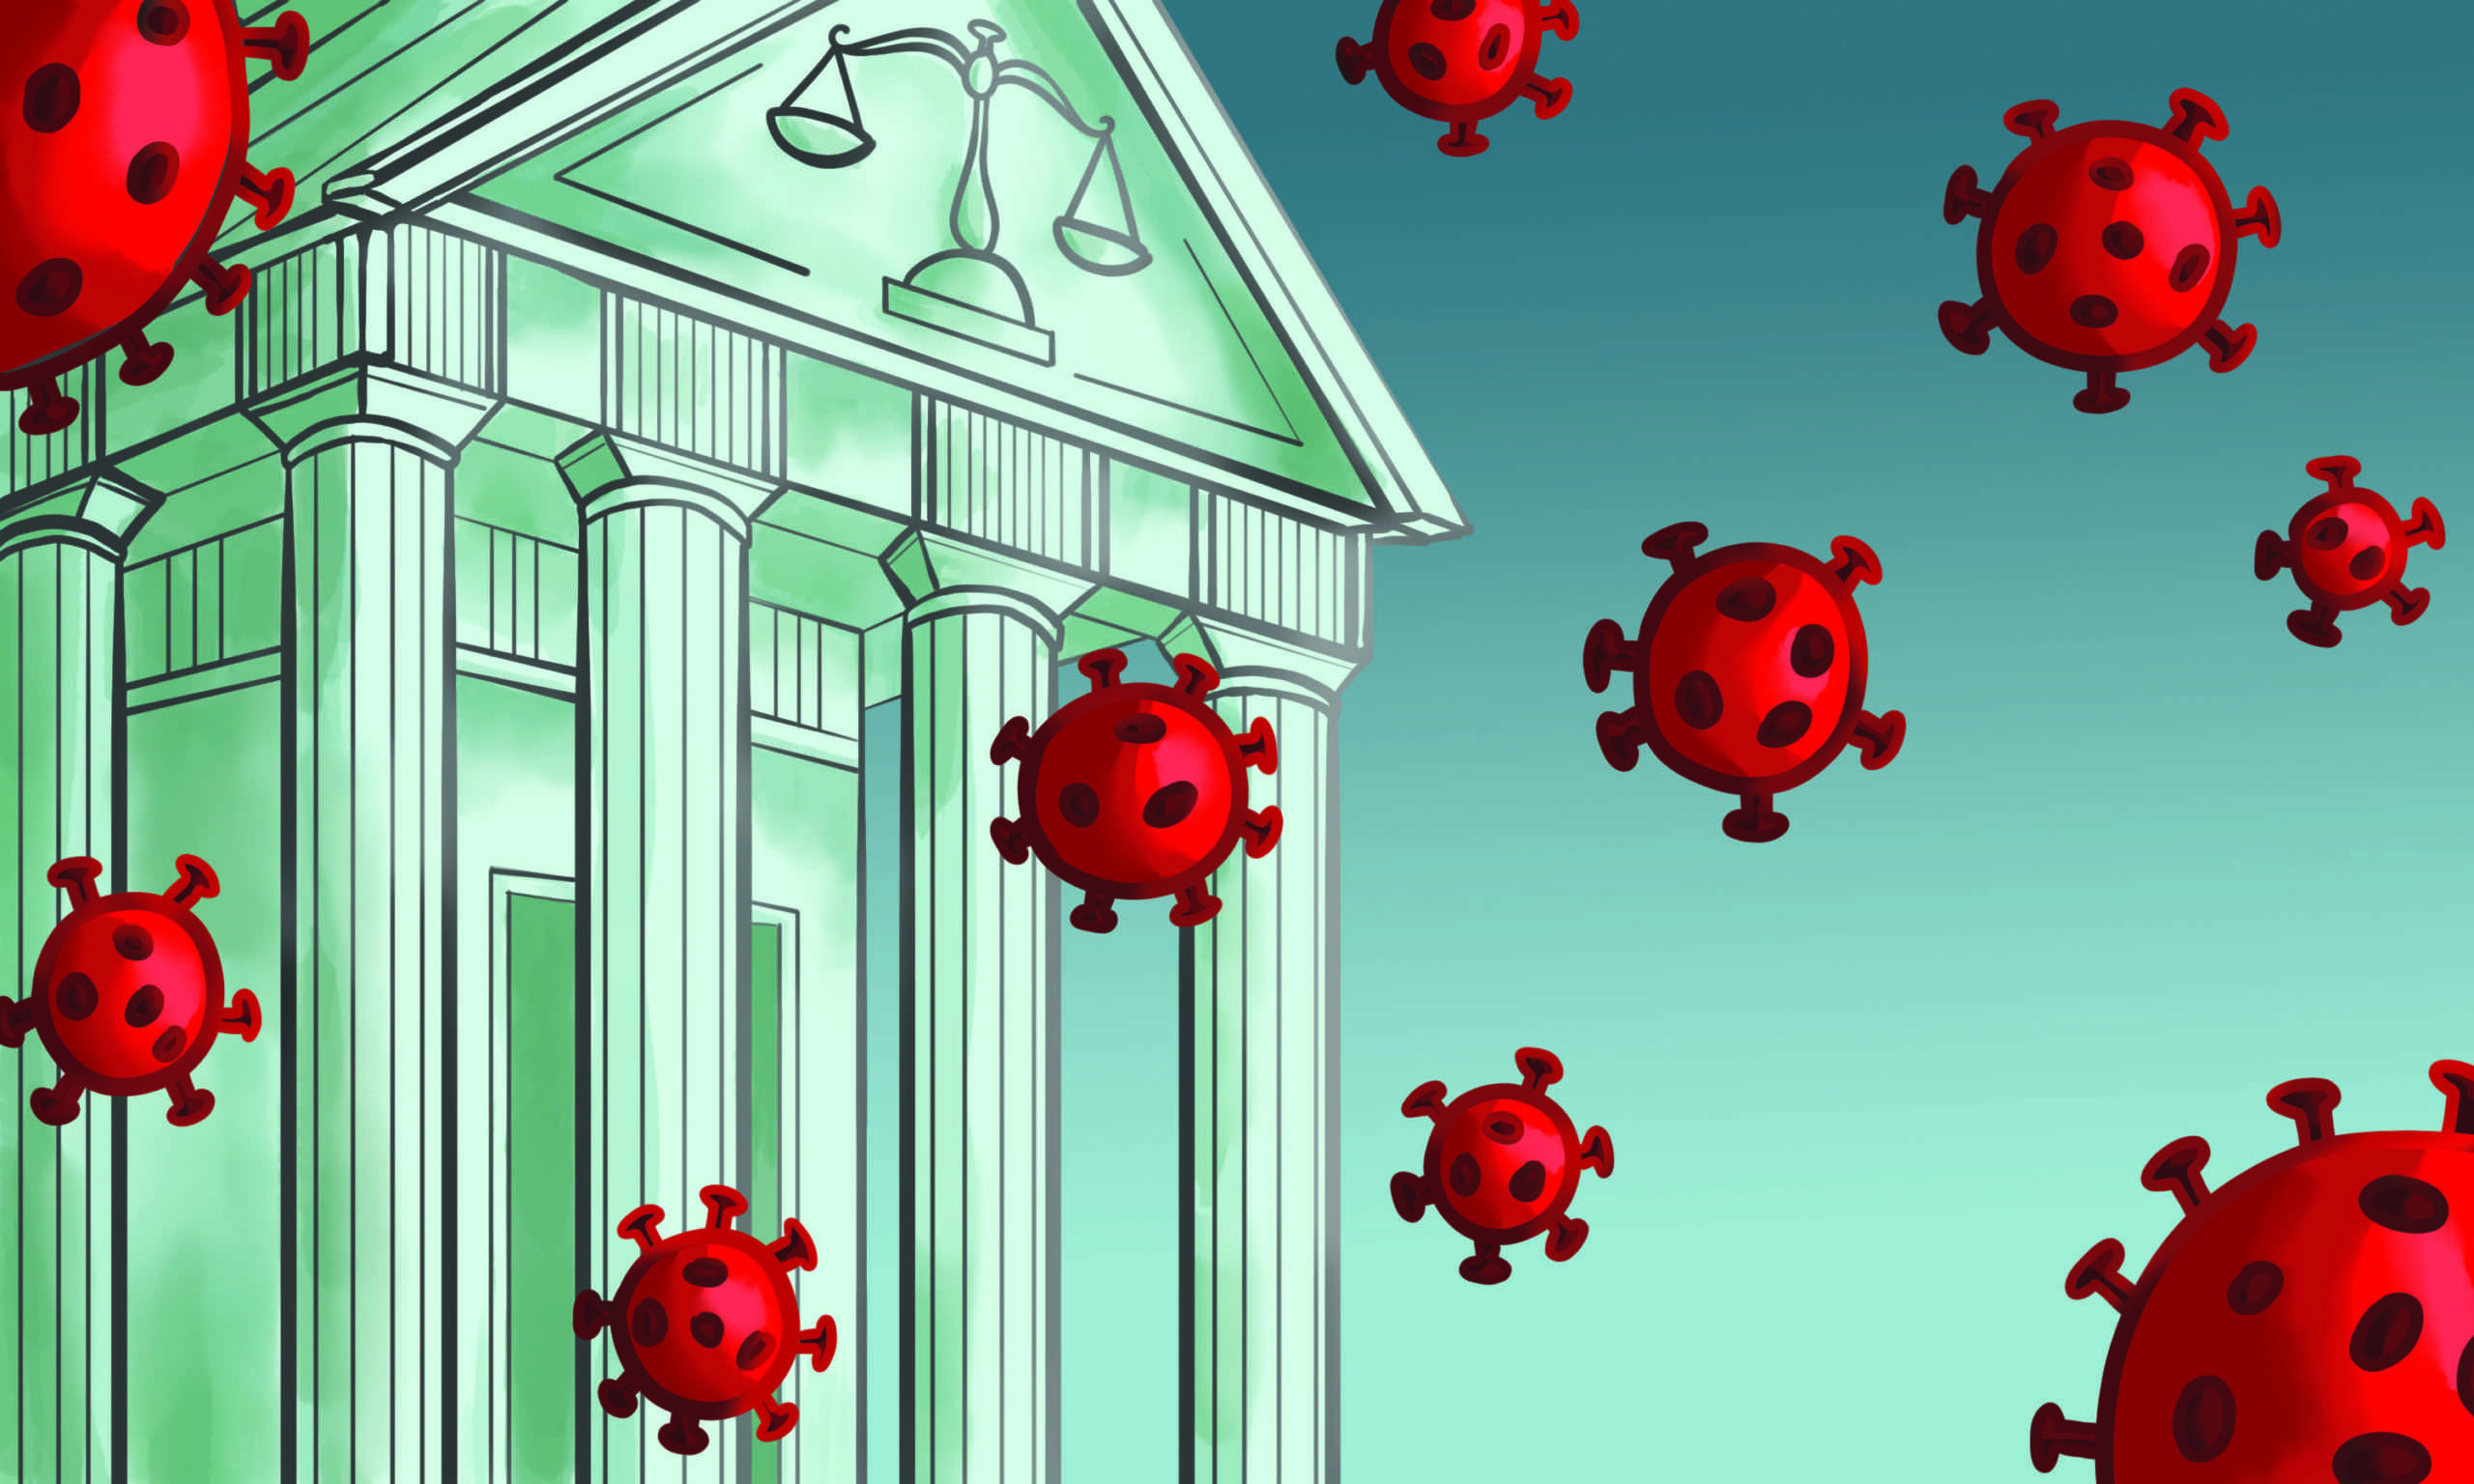 Graphic illustration depicting coronavirus bubbles surrounding a legal building